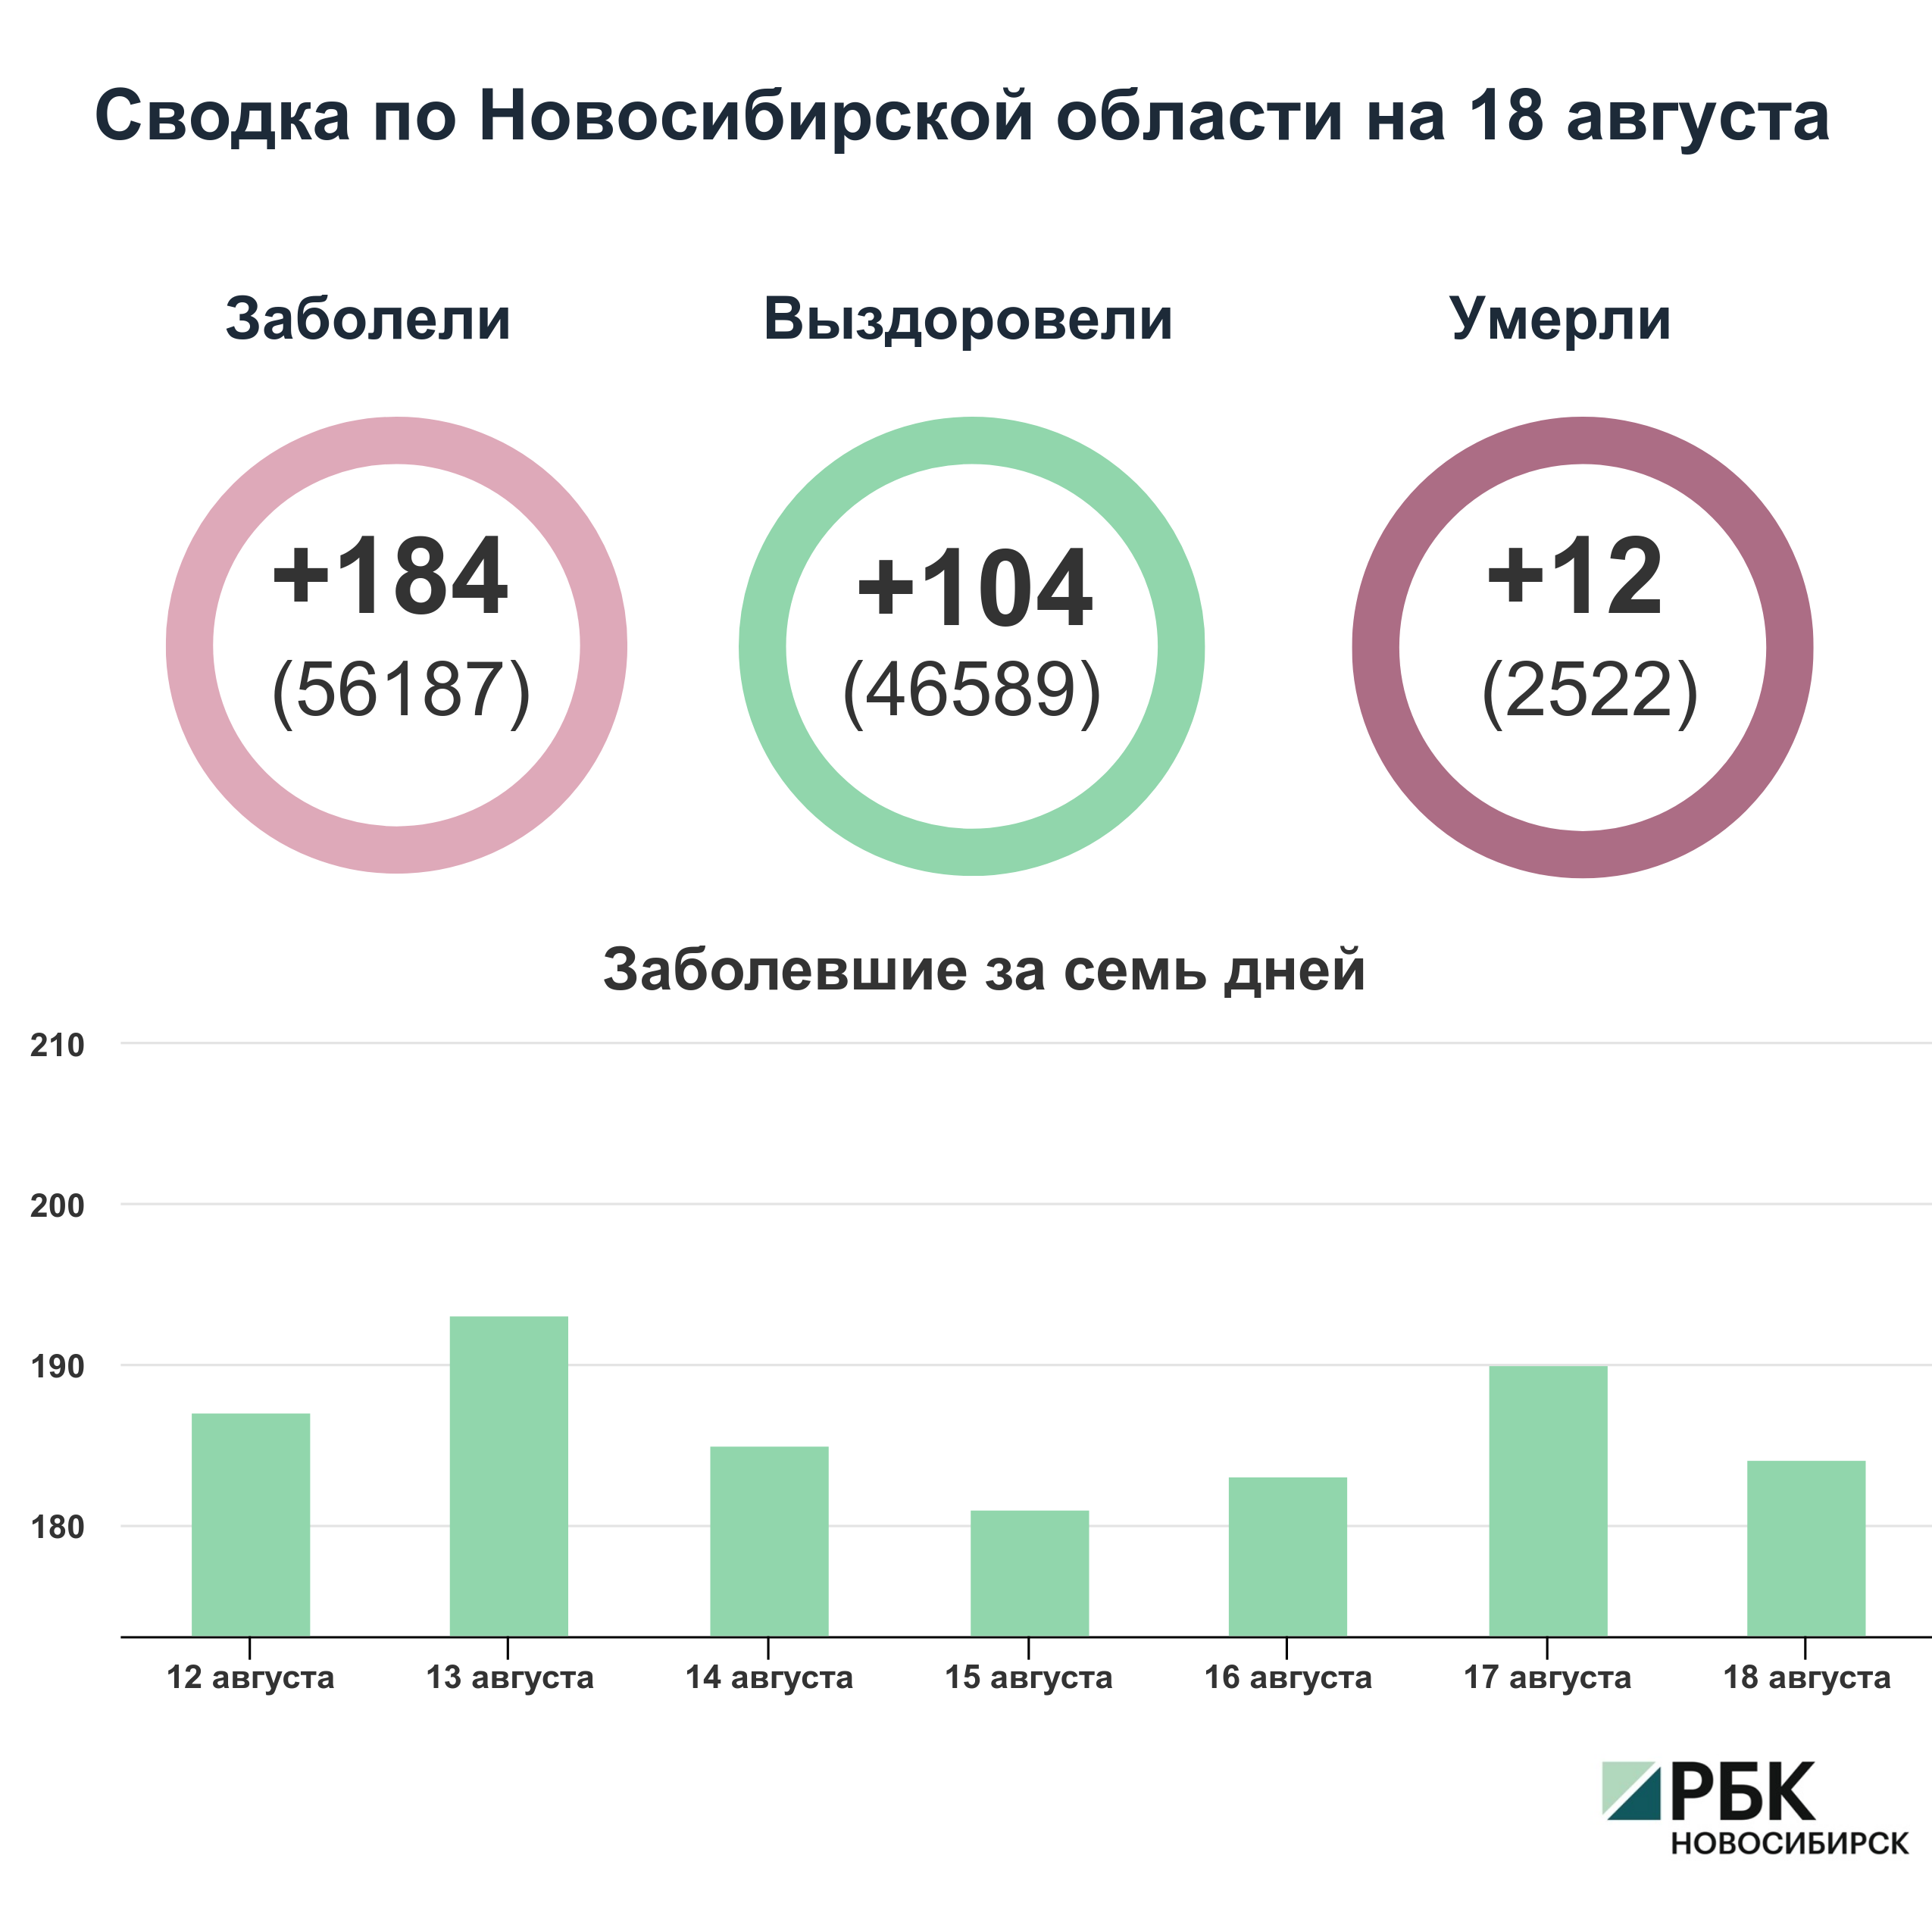 Коронавирус в Новосибирске: сводка на 18 августа